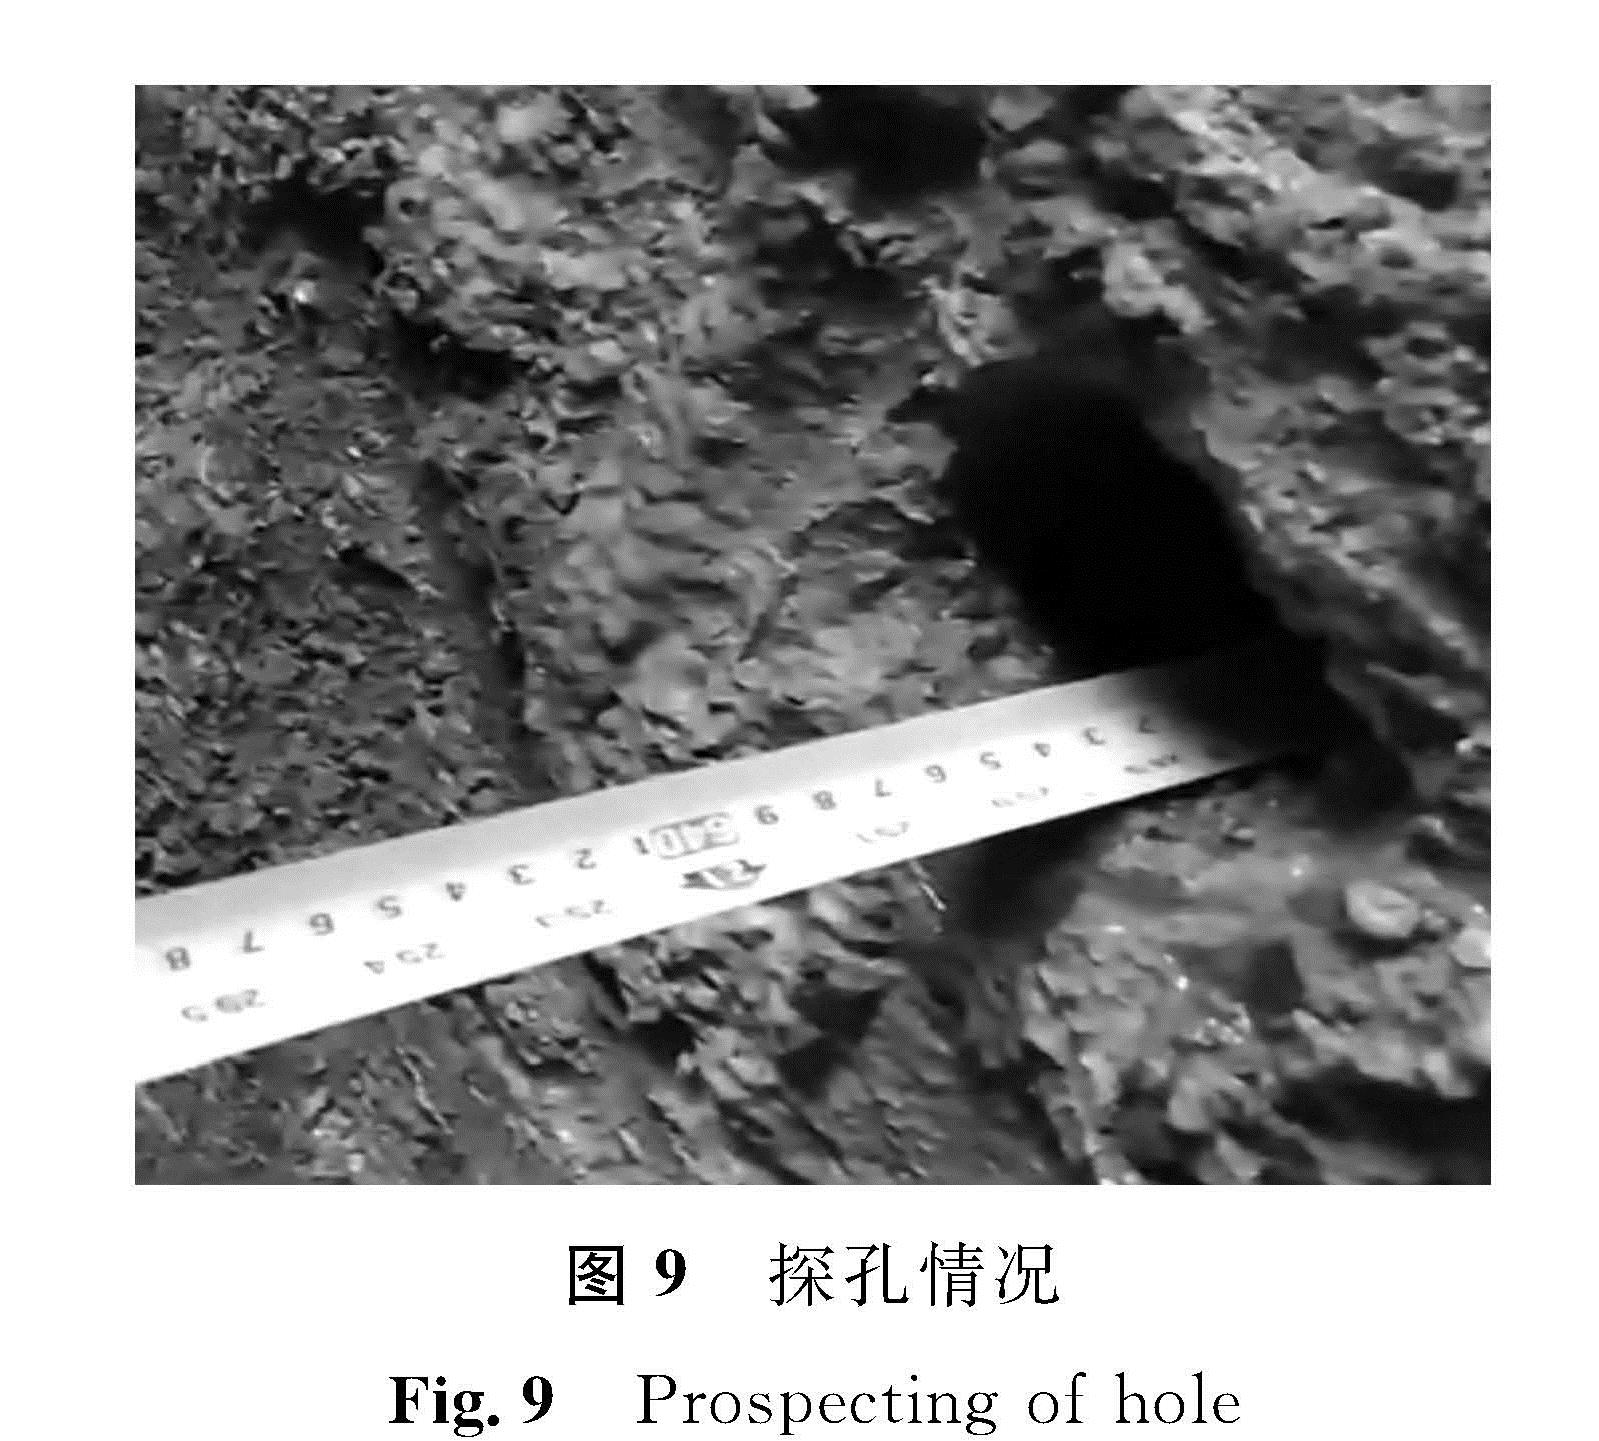 图9 探孔情况<br/>Fig.9 Prospecting of hole